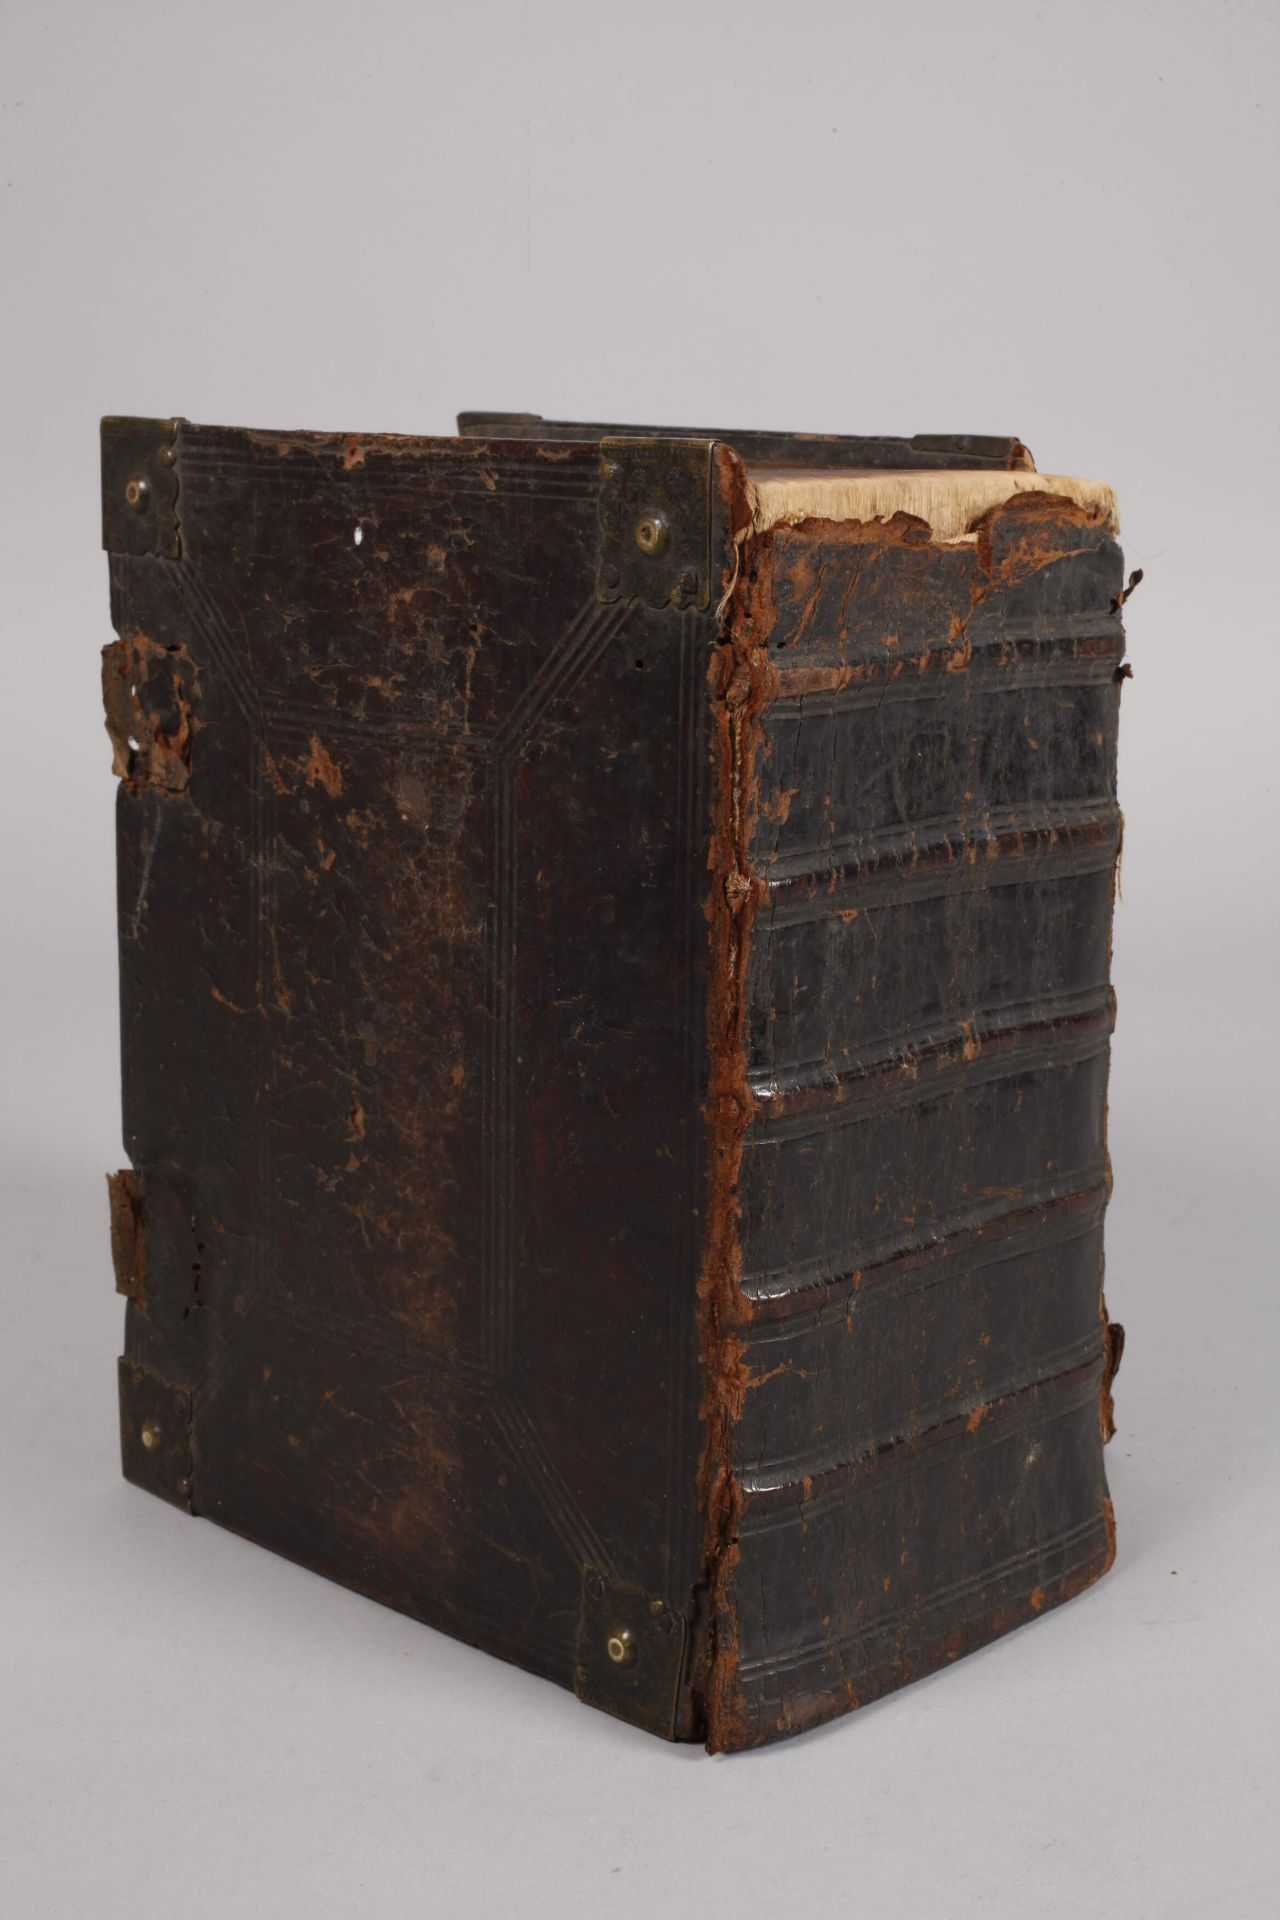 Bibel Wittenberg 1589 - Image 3 of 9